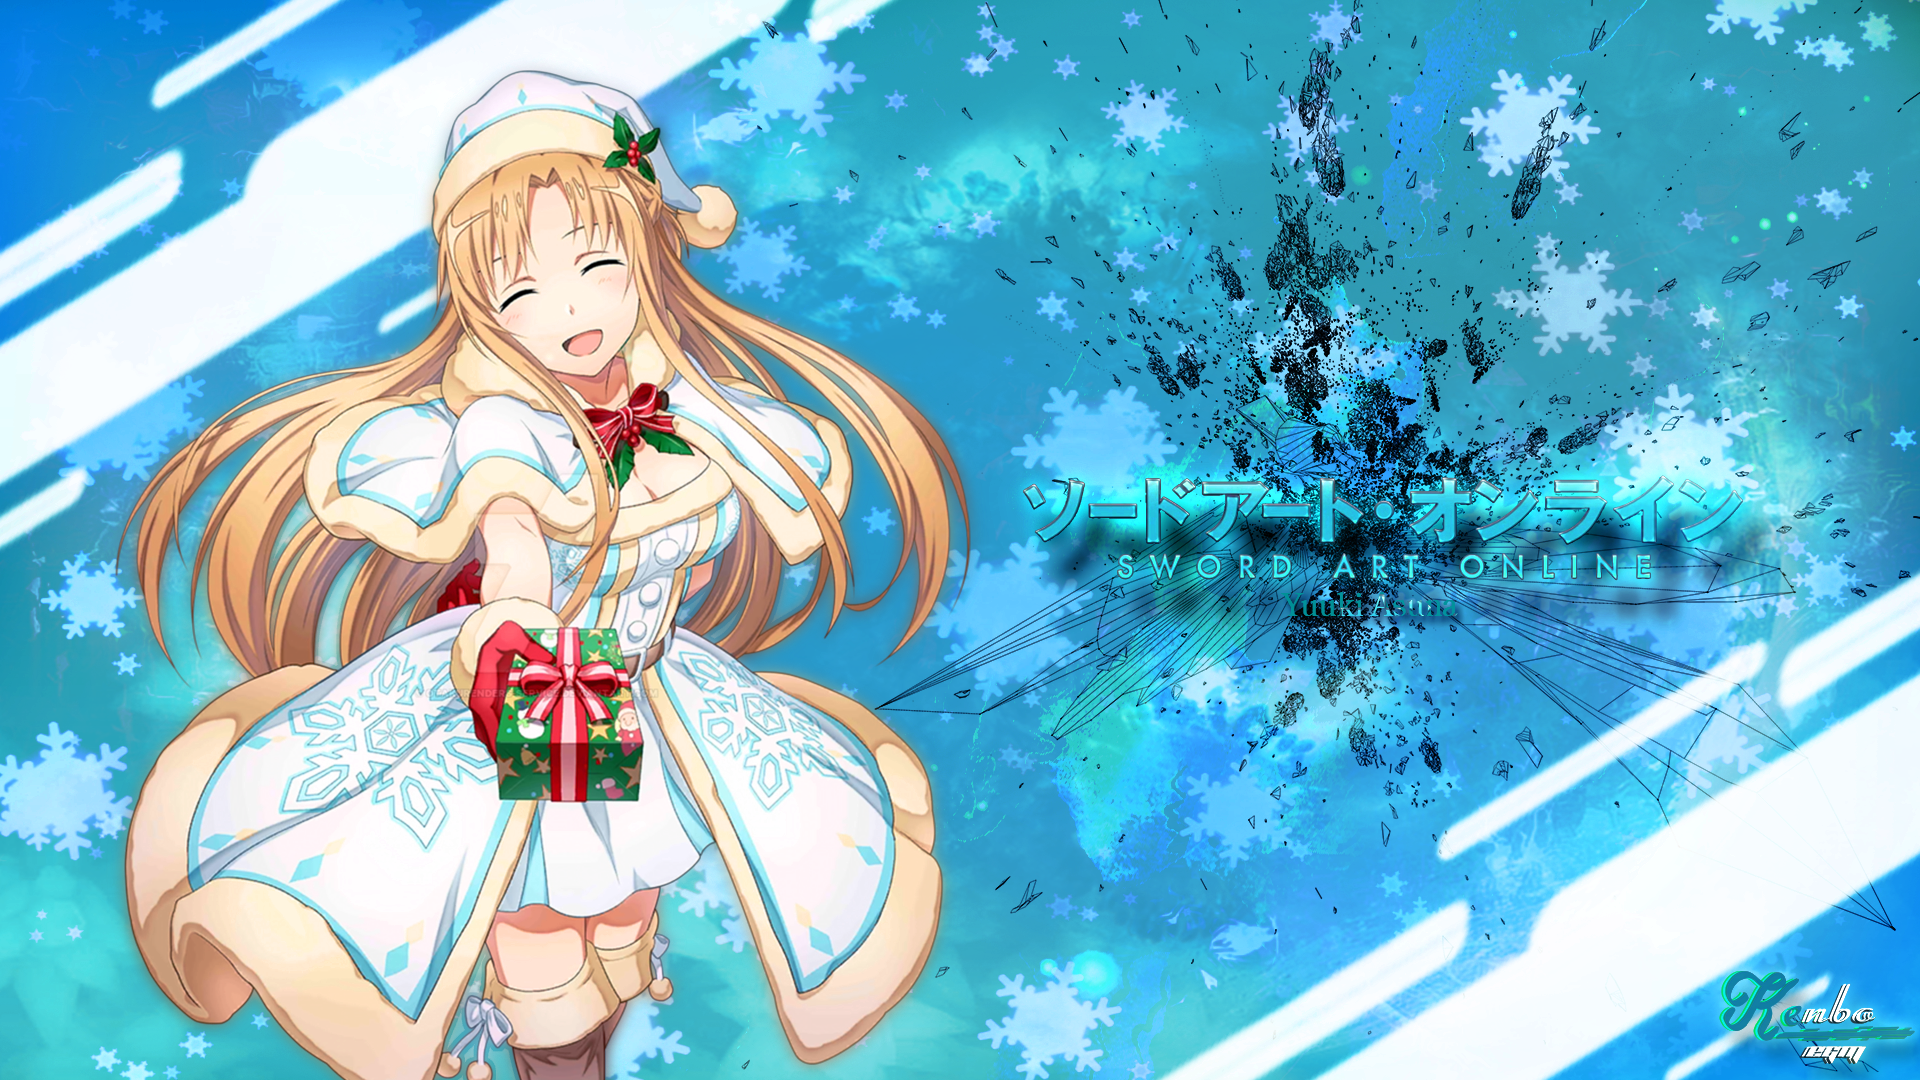 Anime 1920x1080 anime girls anime presents Christmas Christmas ornaments  Sword Art Online Yuuki Asuna (Sword Art Online) holiday Christmas presents happy long hair dress closed eyes open mouth